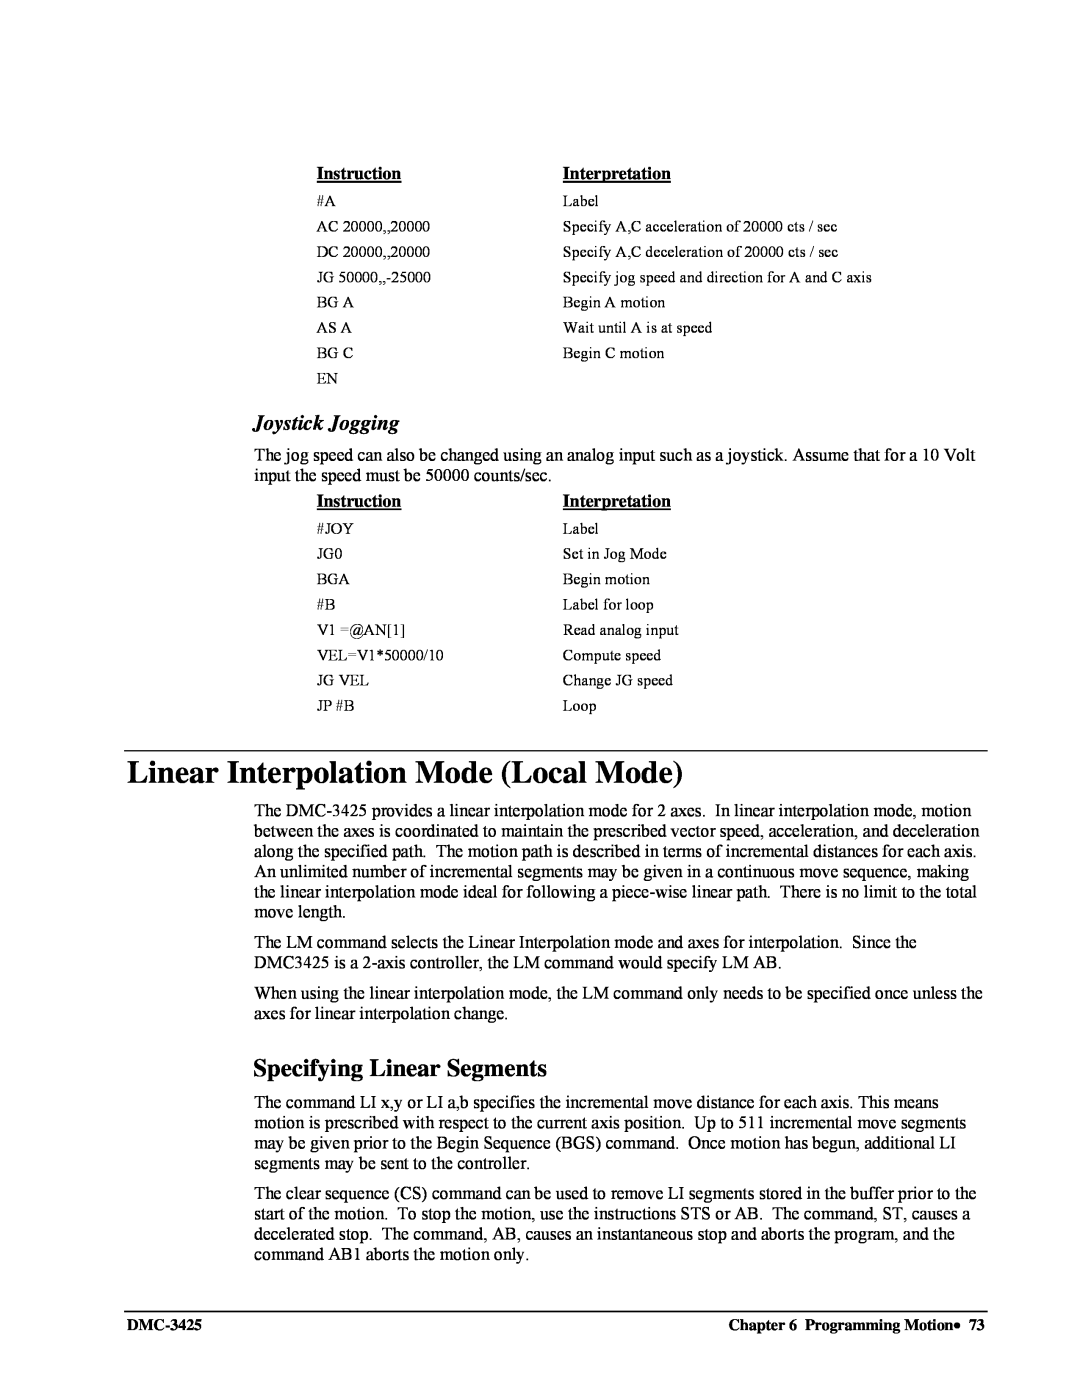 Galil DMC-3425 user manual Linear Interpolation Mode Local Mode, Specifying Linear Segments, Joystick Jogging 